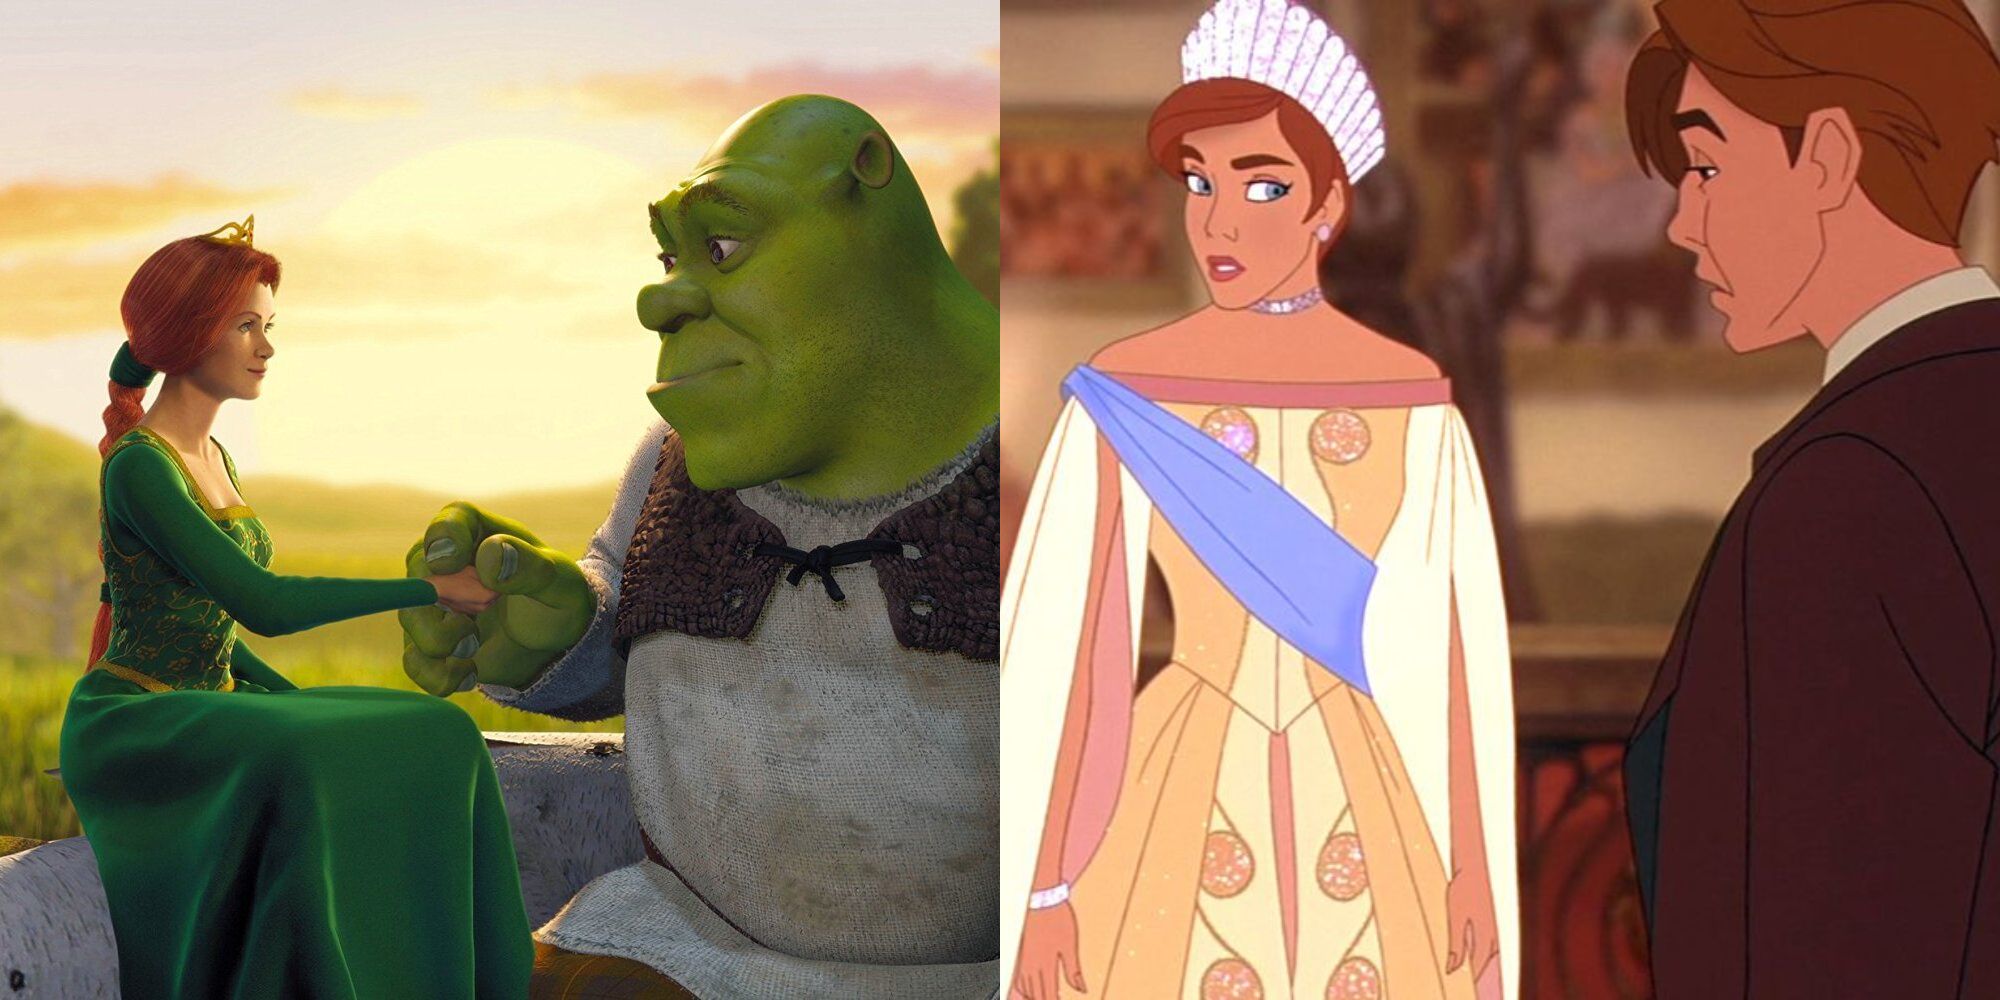 Split image showing Fiona and Shrek in Shrek and Anastasia and Dimitri in Anastasia.